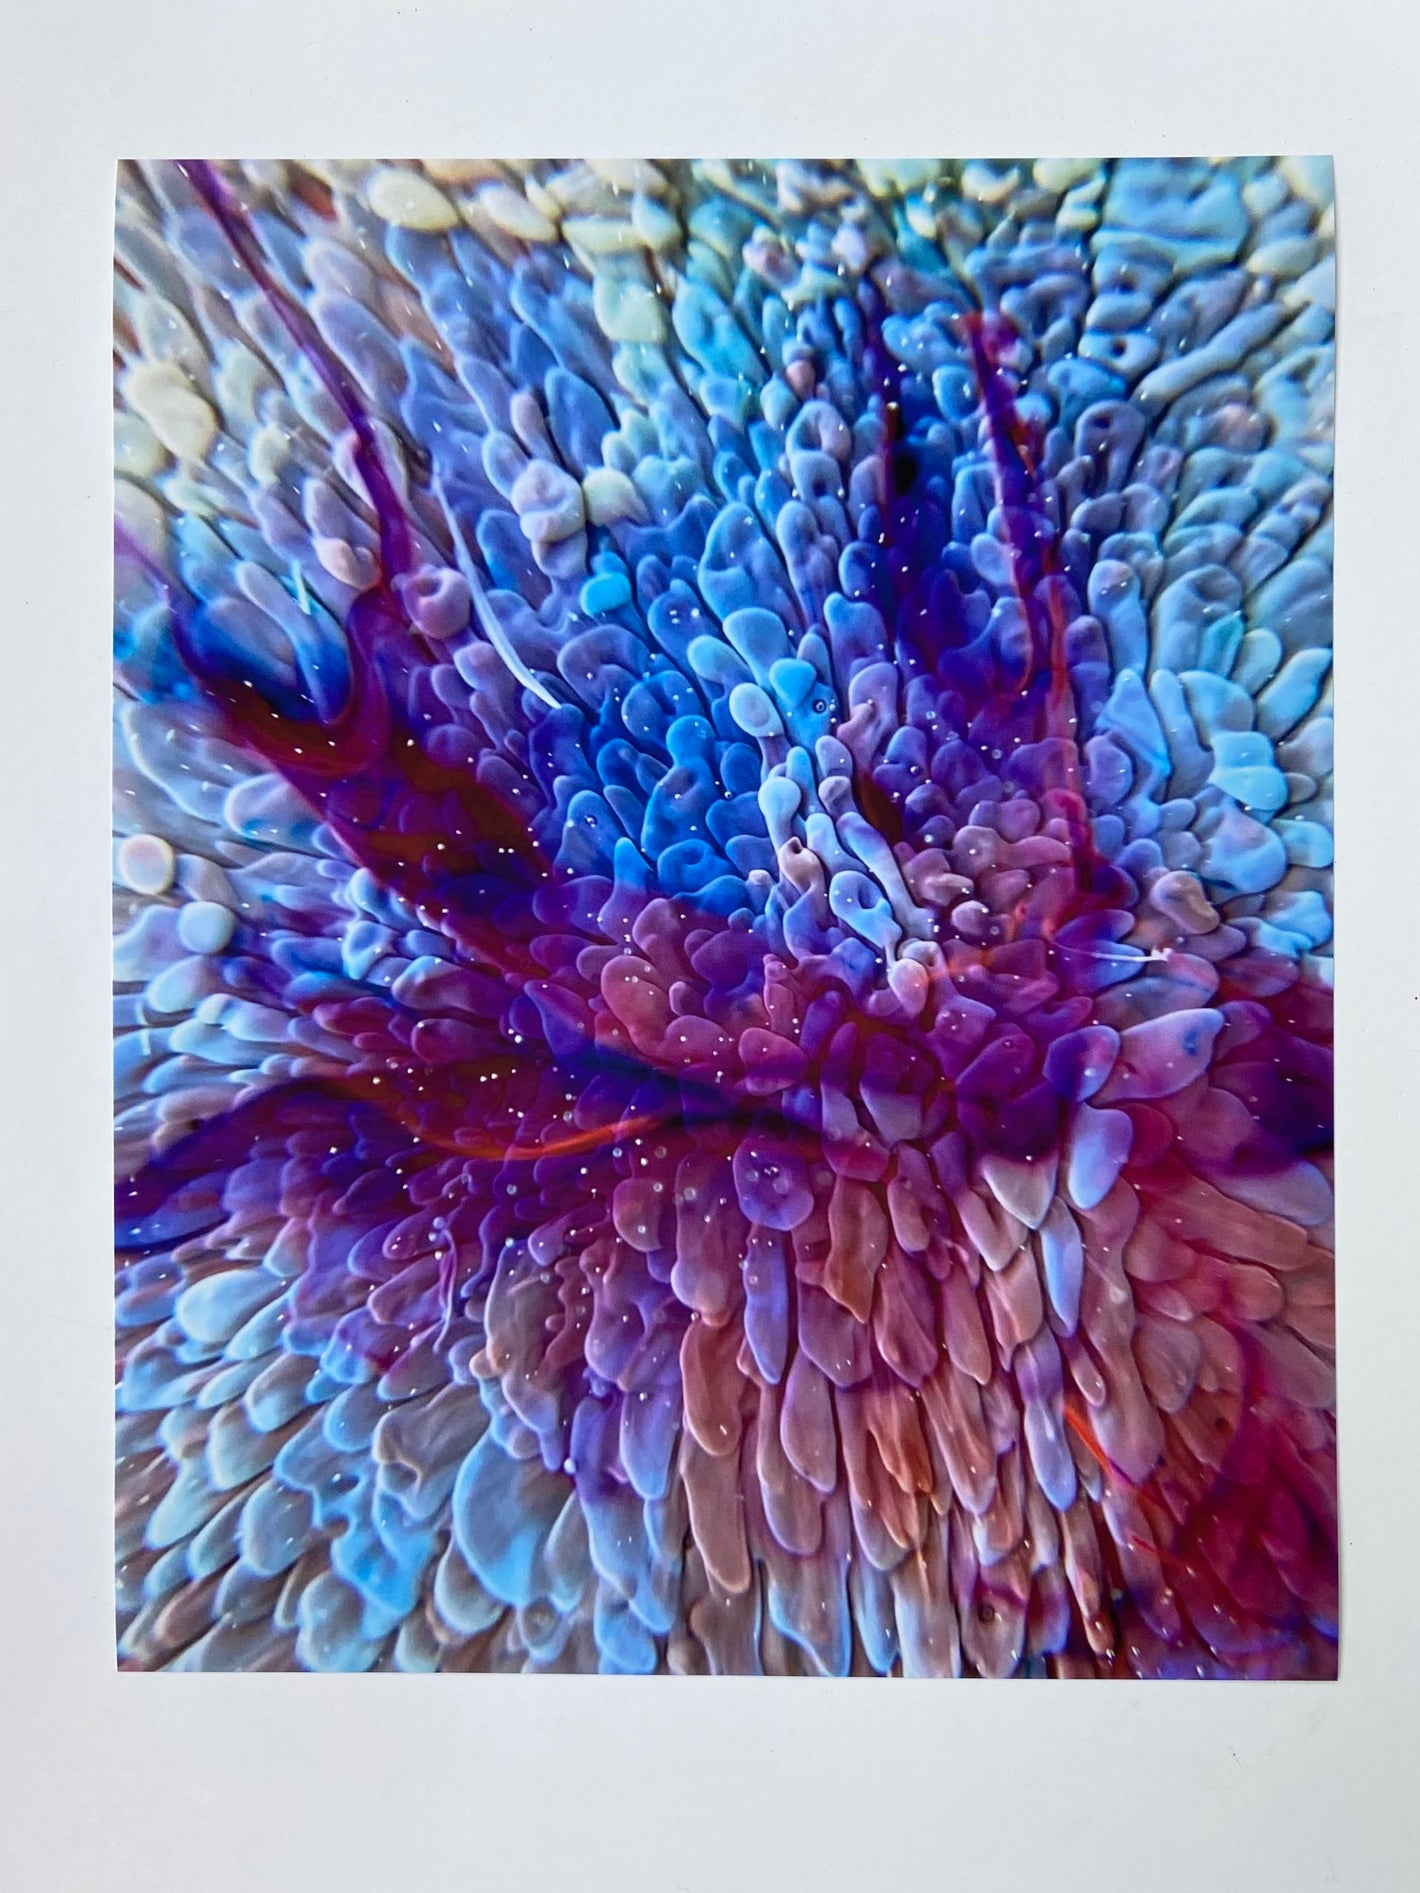 Bespattered Facade 8" x 10" Resin Petri Giclee Print #7